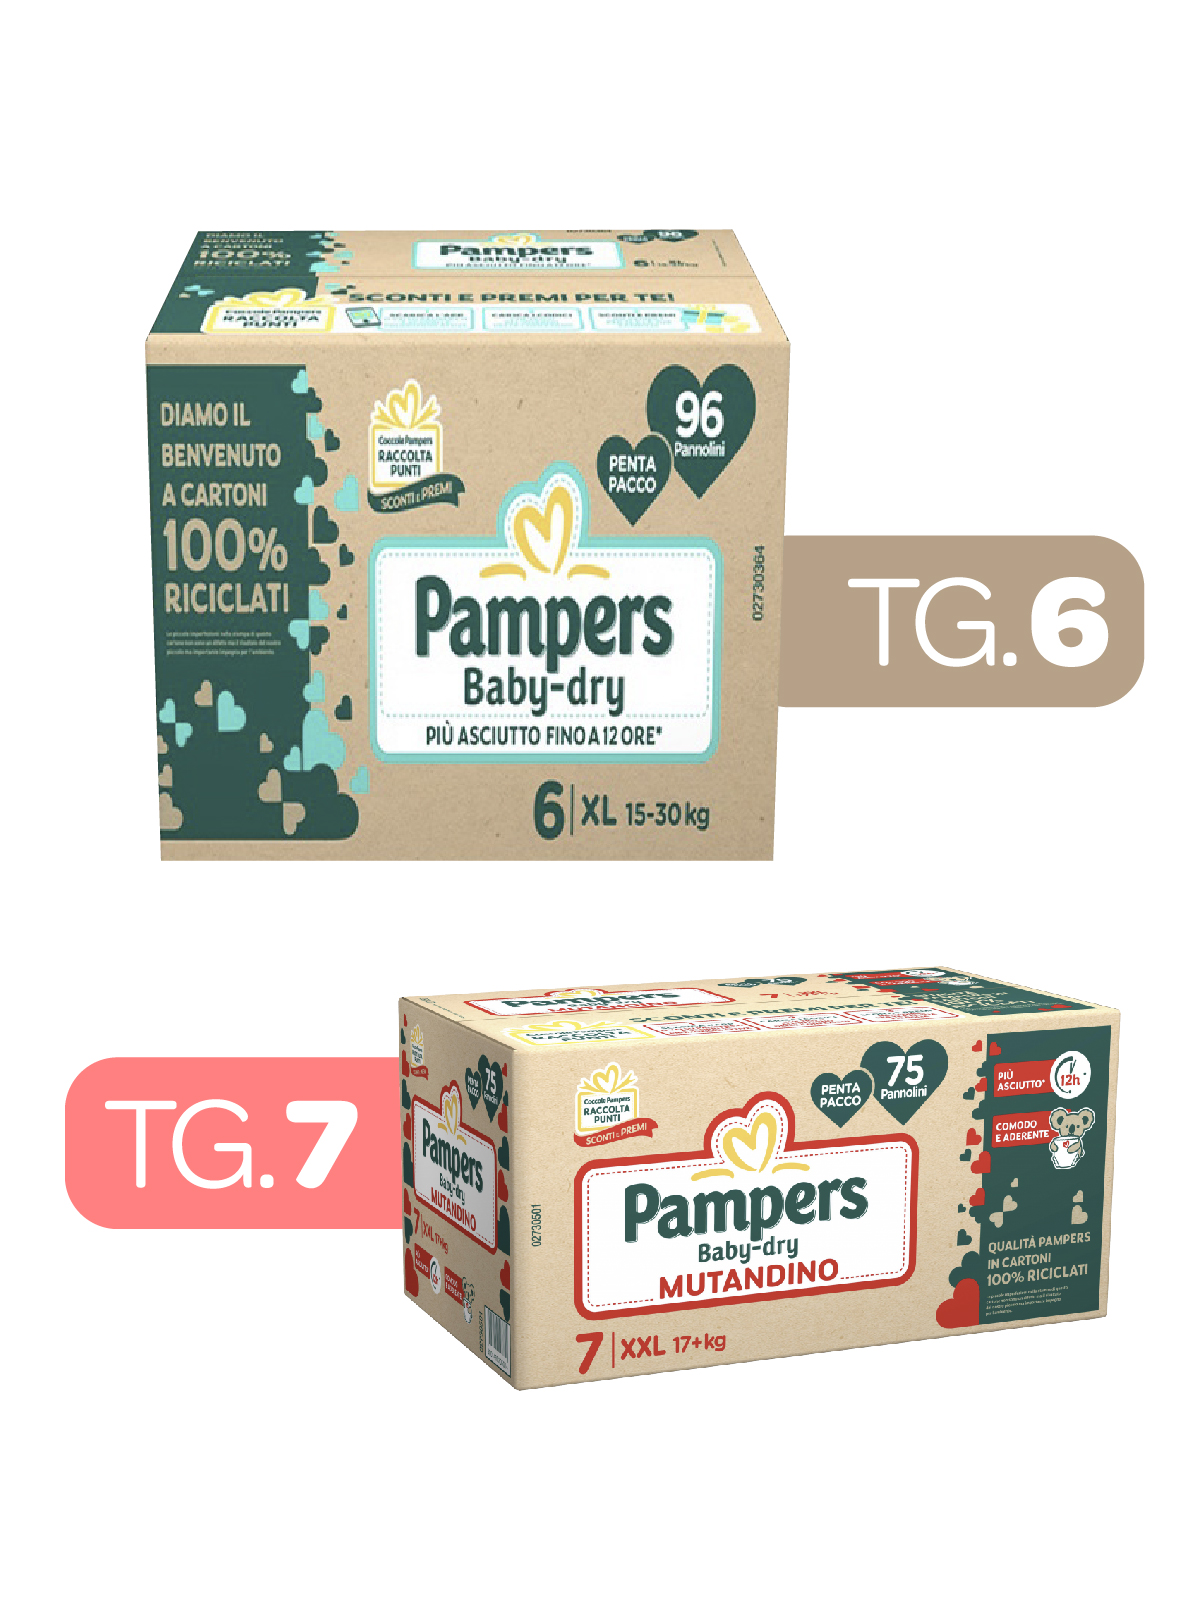 Pampers – baby dry tradizionale tg. 6 x96 pz + mutandino baby dry tg. 7 x75 pz - 